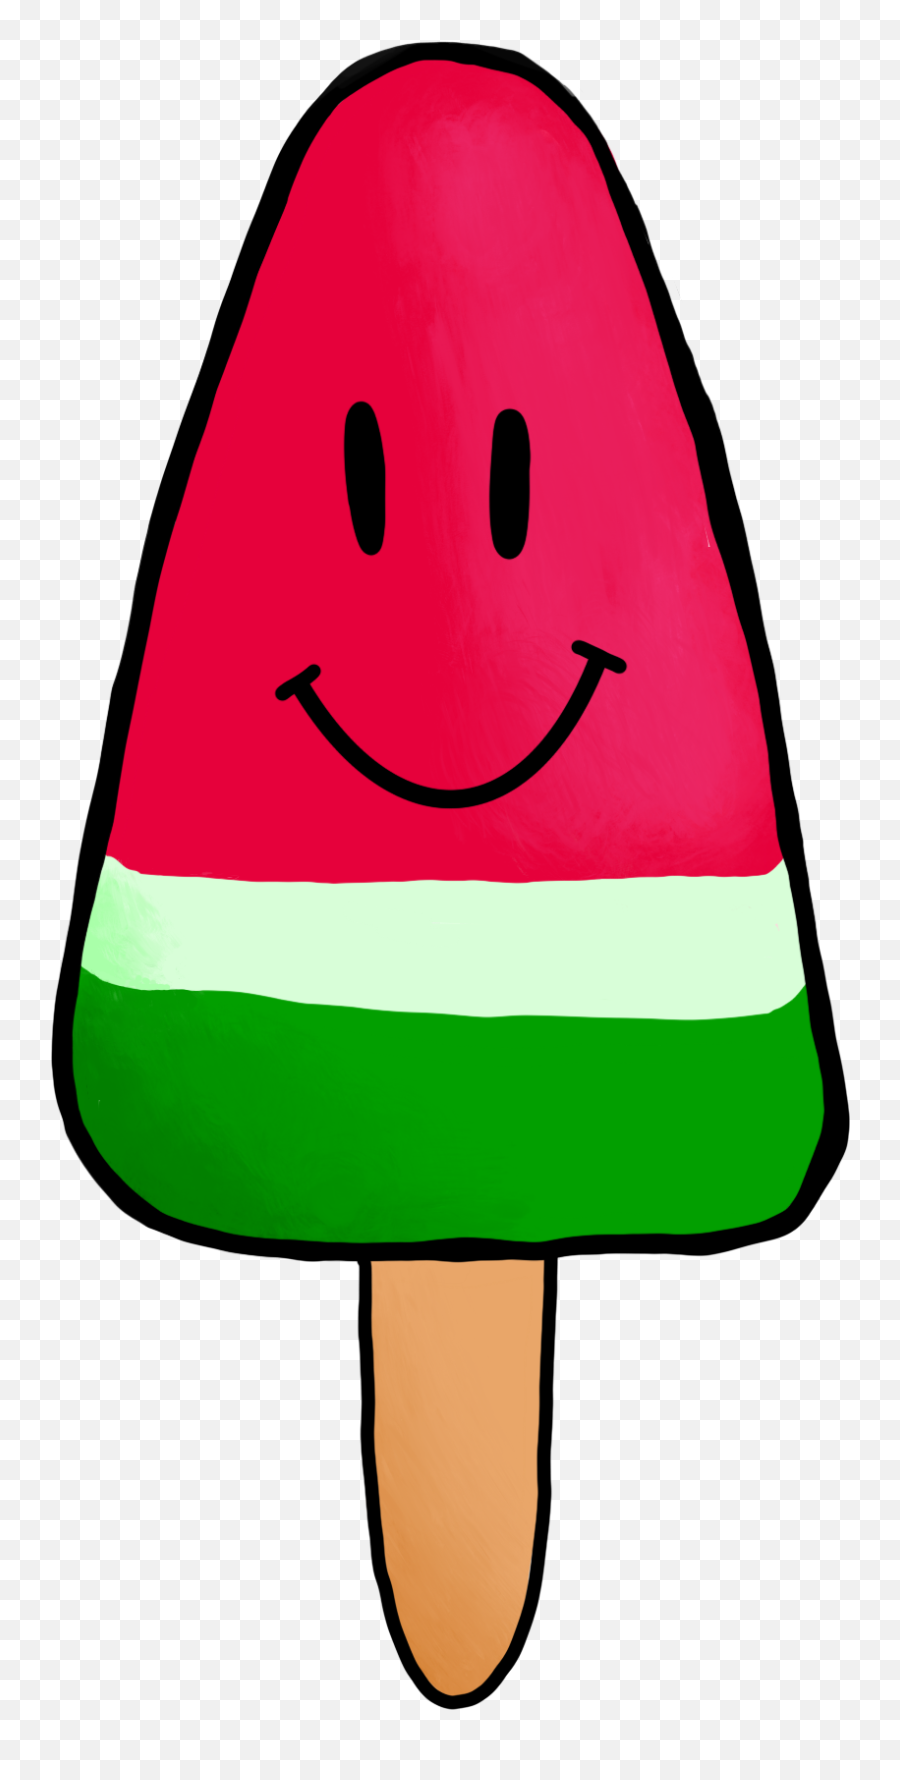 Smiley Watermelon Lolly Watermelon Lollies Cute - Girly Emoji,Emoticon Vids Rap Eminem New